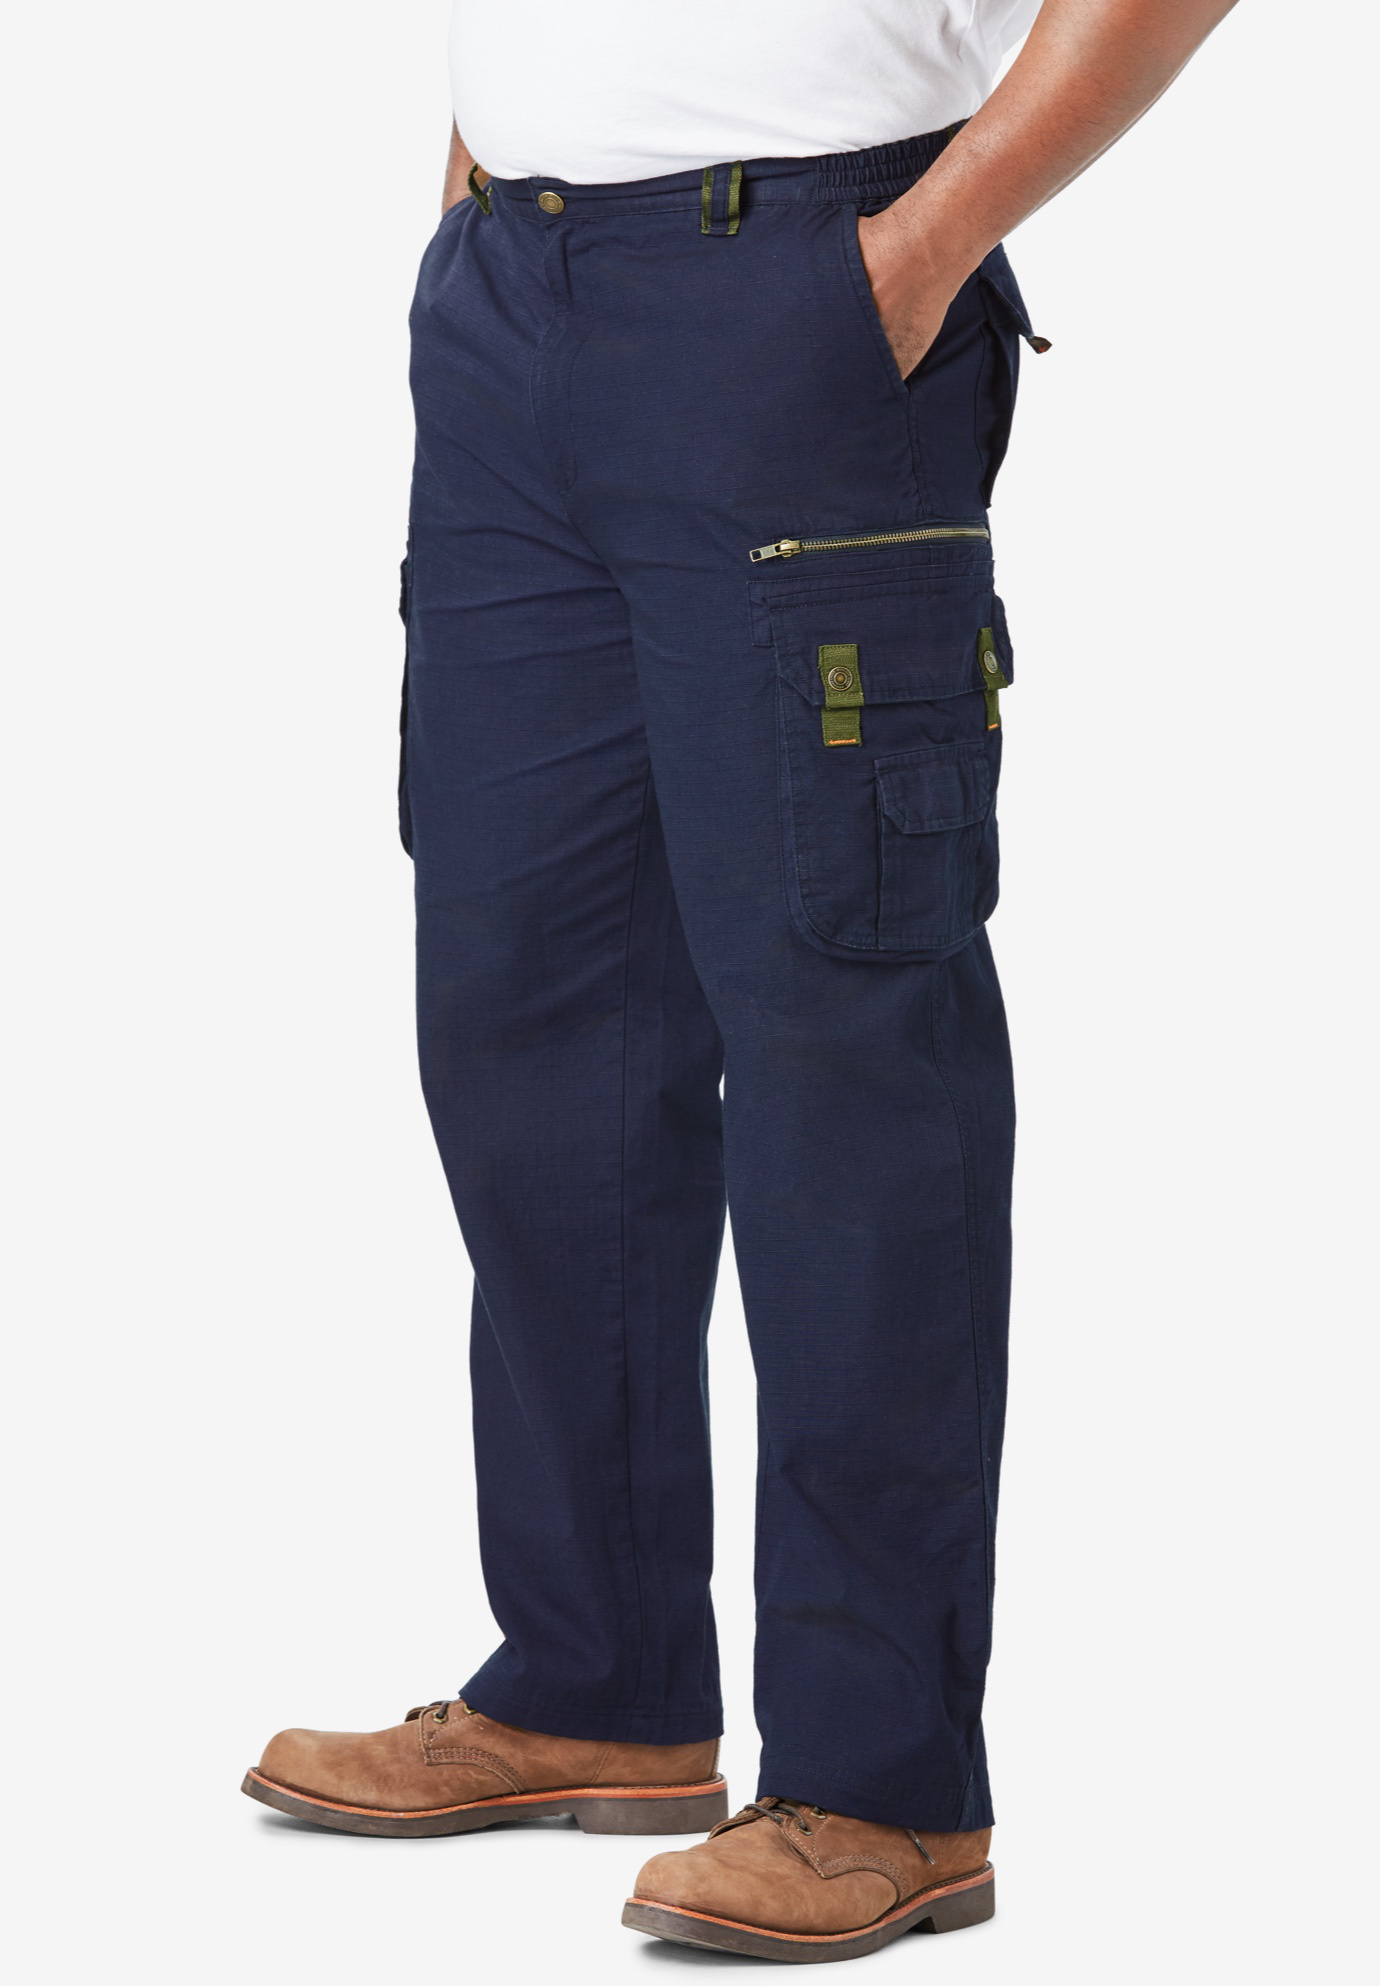 navy blue ripstop cargo pants